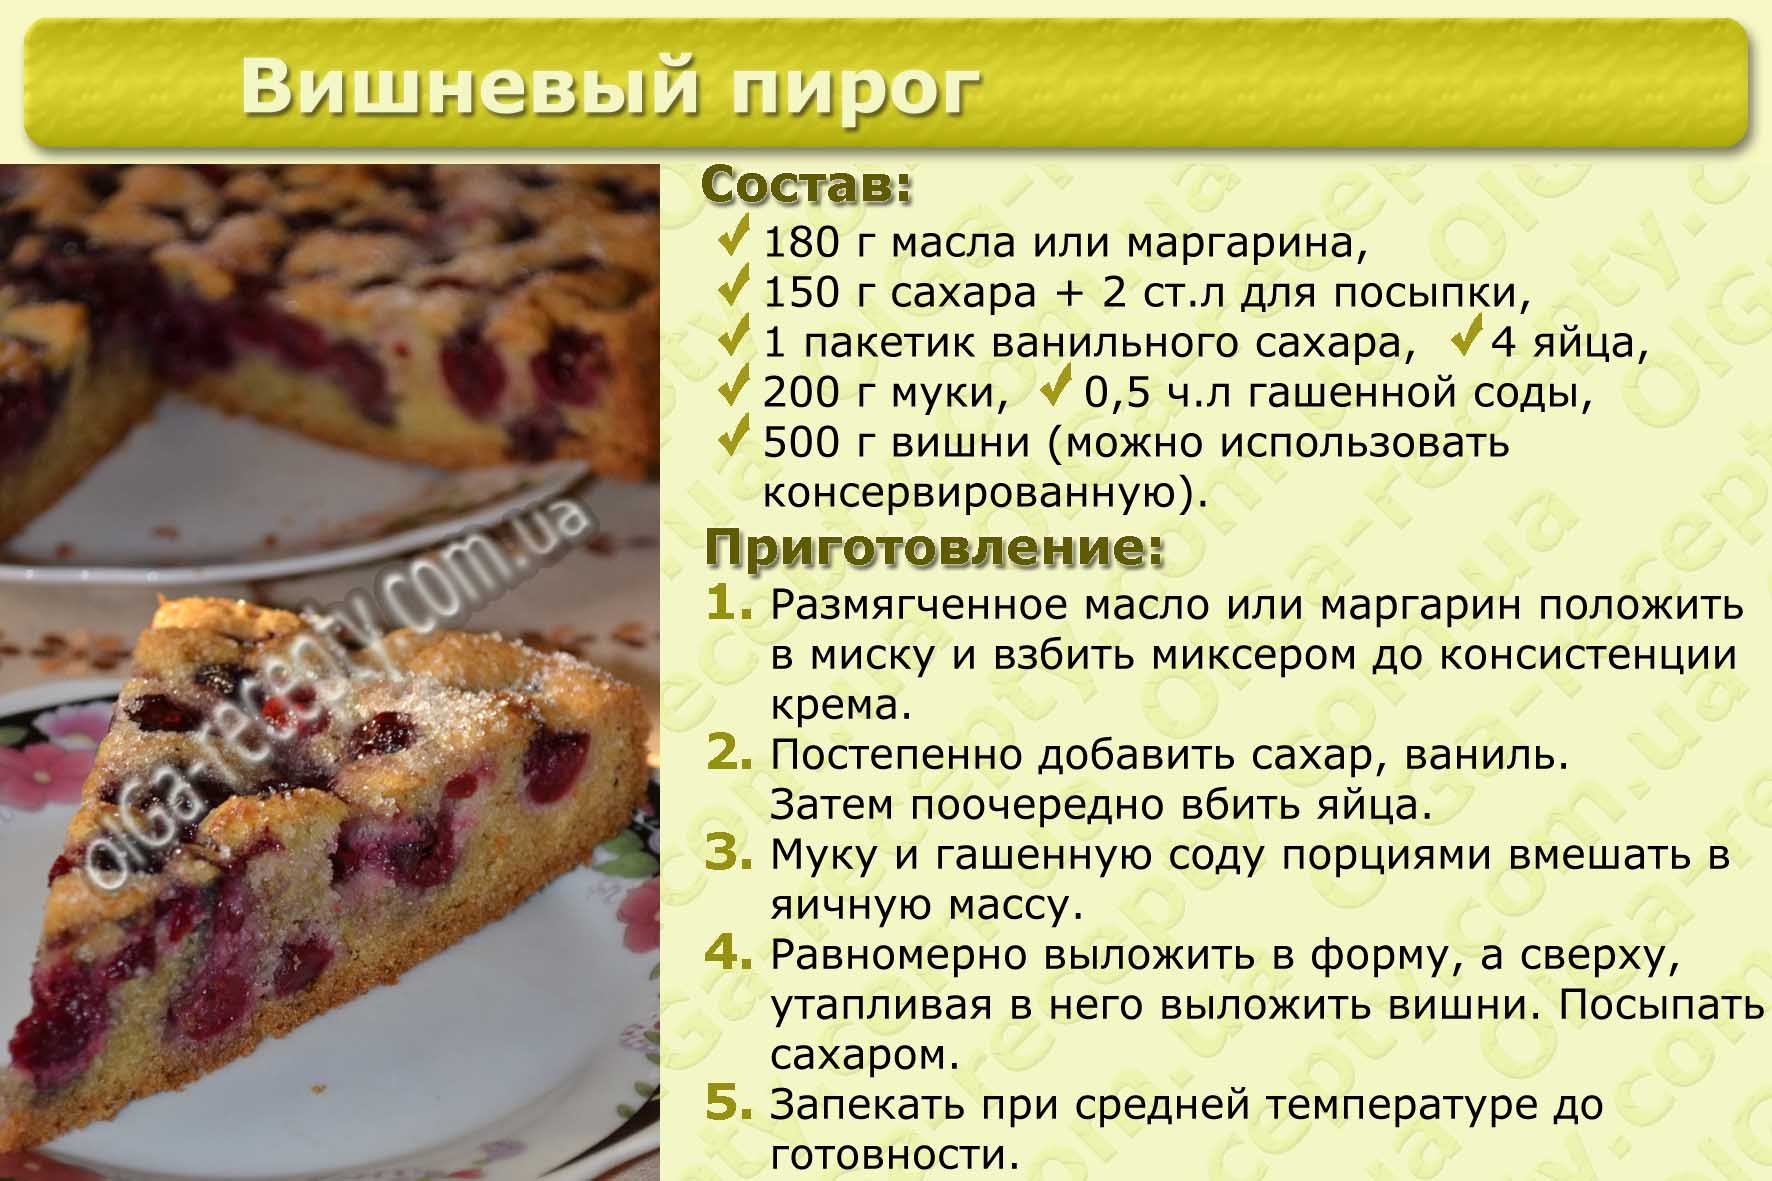 Например пирог. Рецепт пирога в картинках. Рецепт фотографии пирог. Рецепты простой выпечки в картинках. Рецепт пирога пошагово.